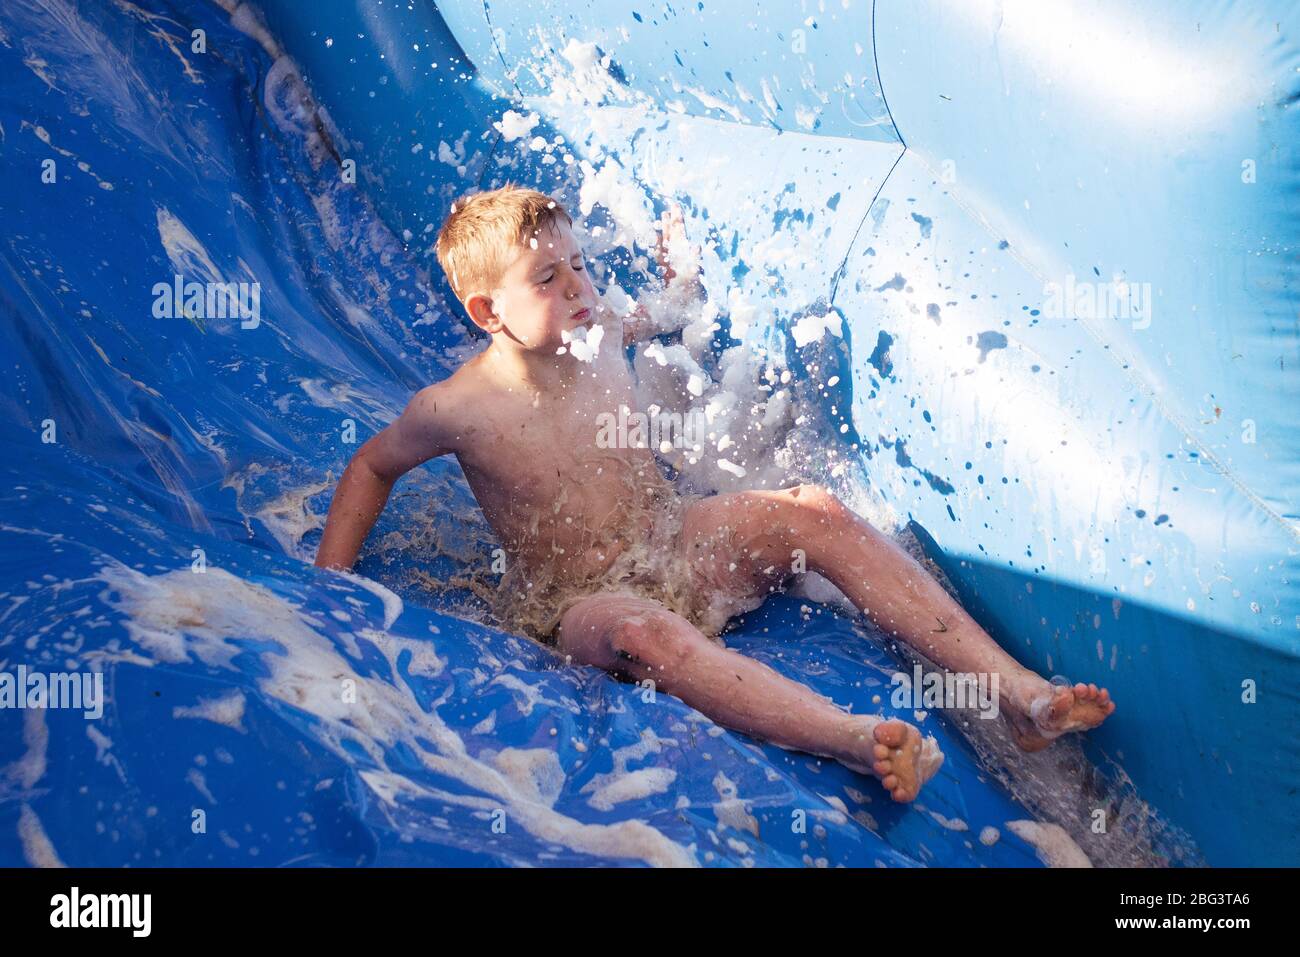 Children going down a slip and slide Stock Photo